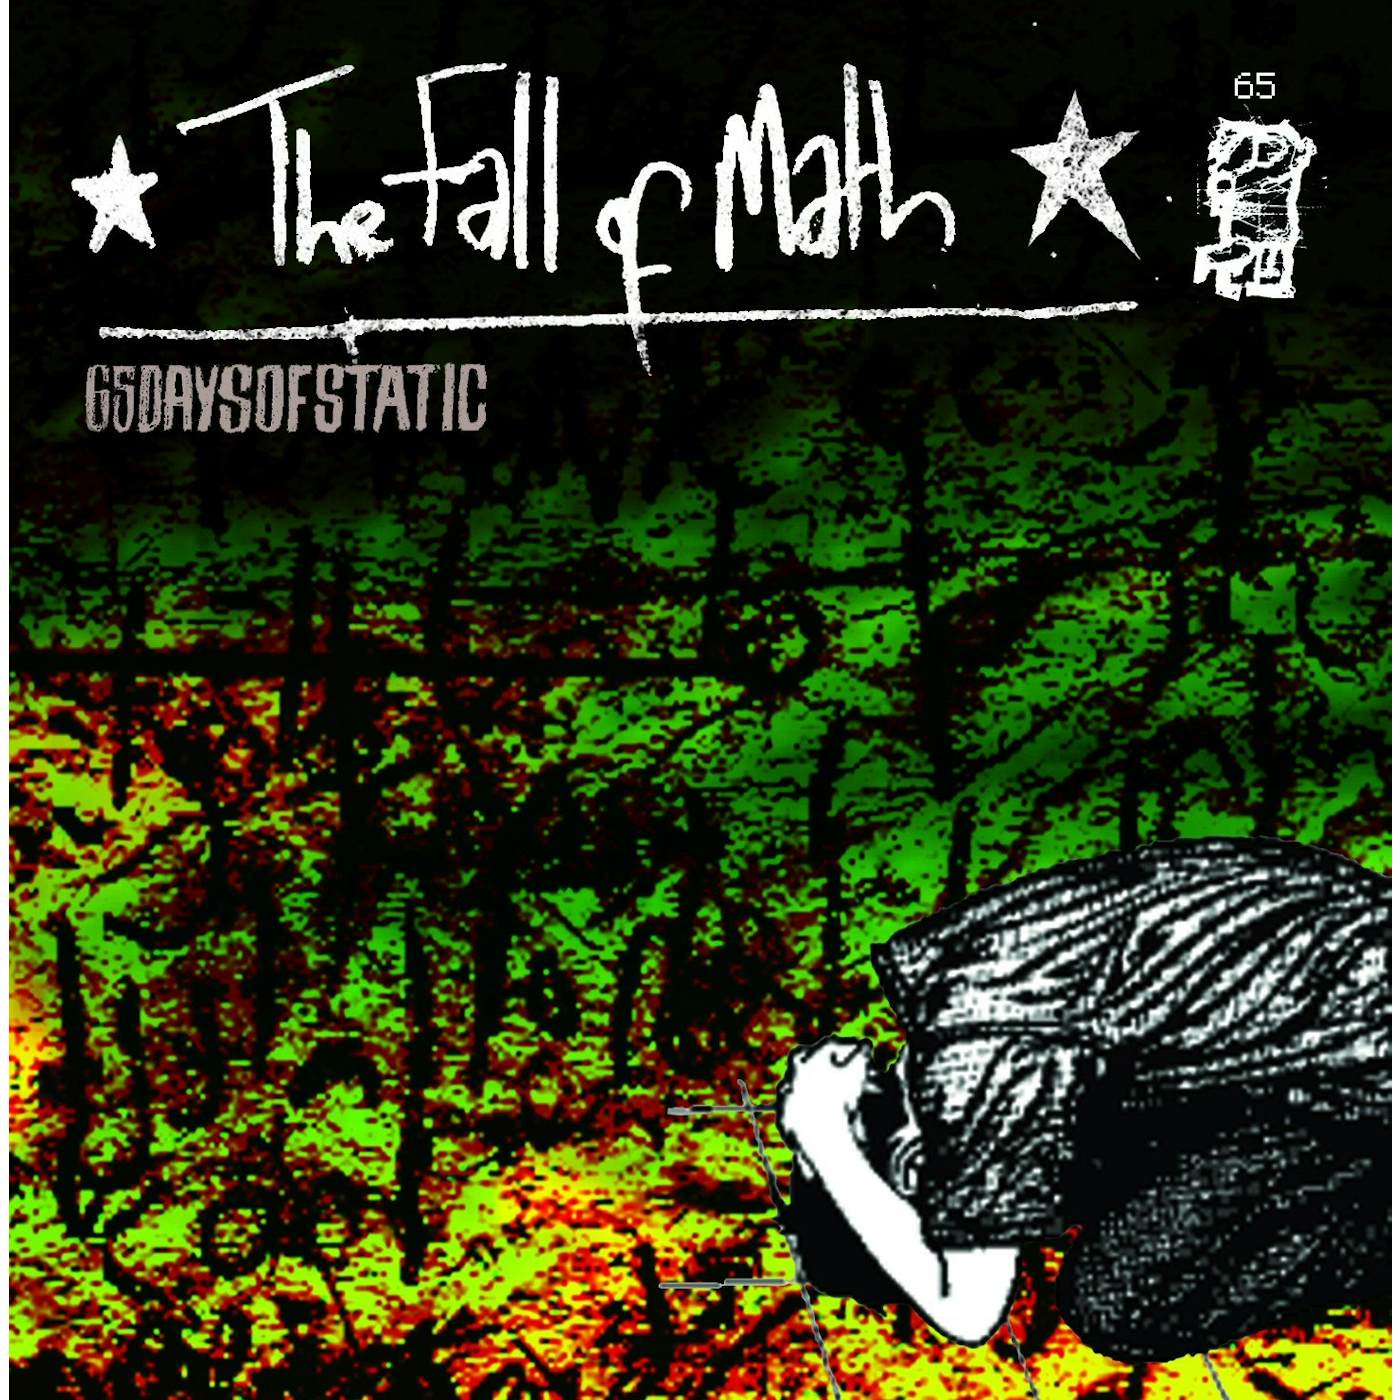 65daysofstatic 'The Fall of Math' Vinyl Record